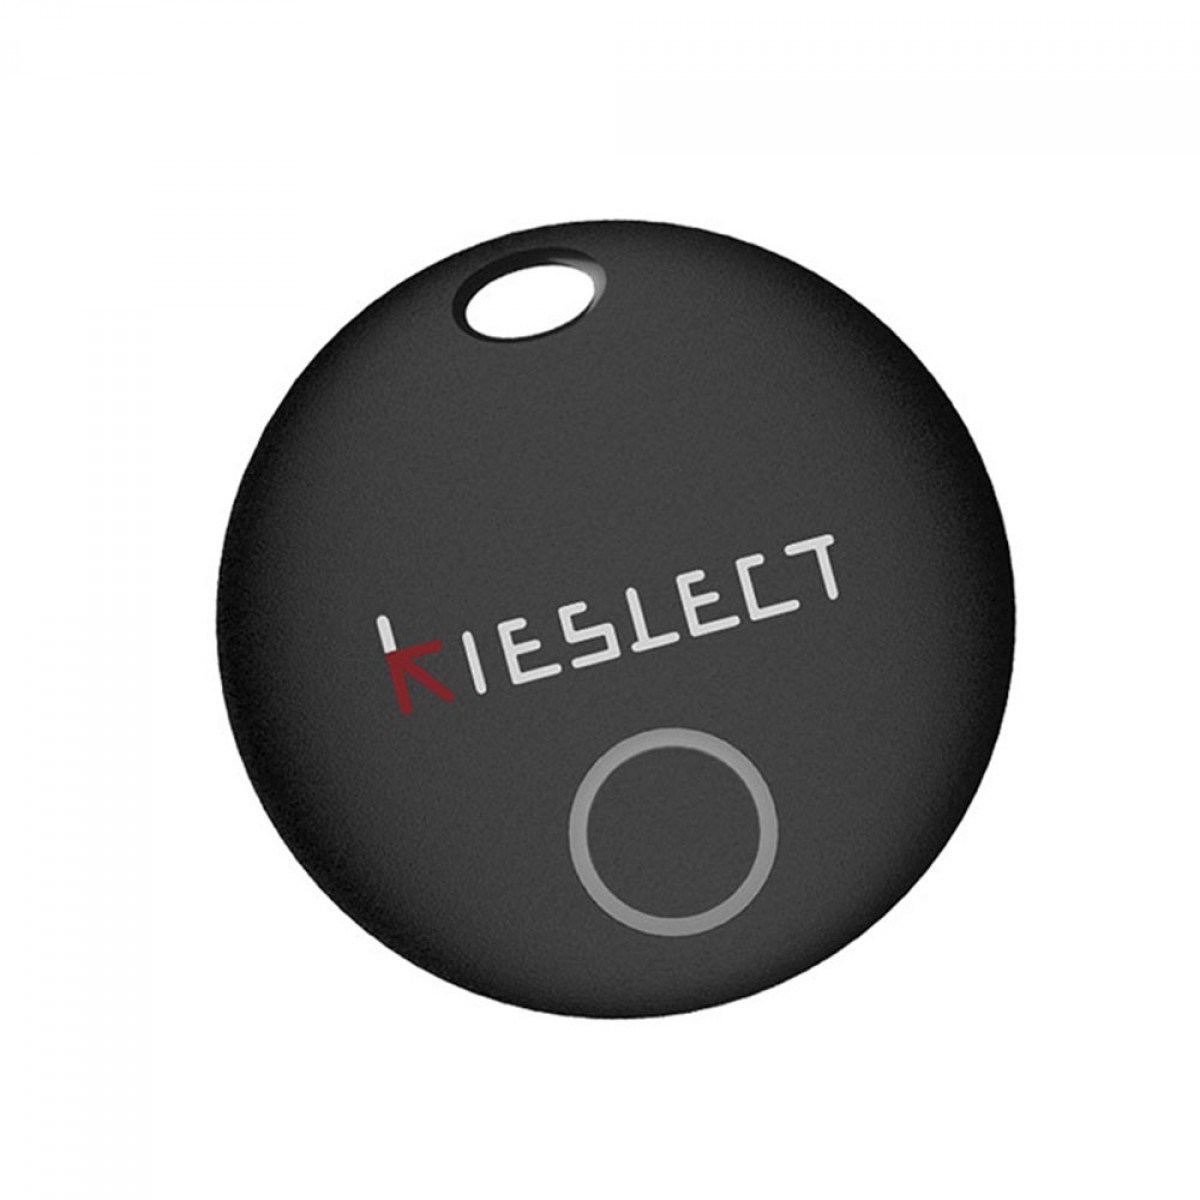 Etiqueta Eletrônica Xiaomi Kieslect Smart Tag Lite com 3 Unidades, Bluetooth, KIENA101